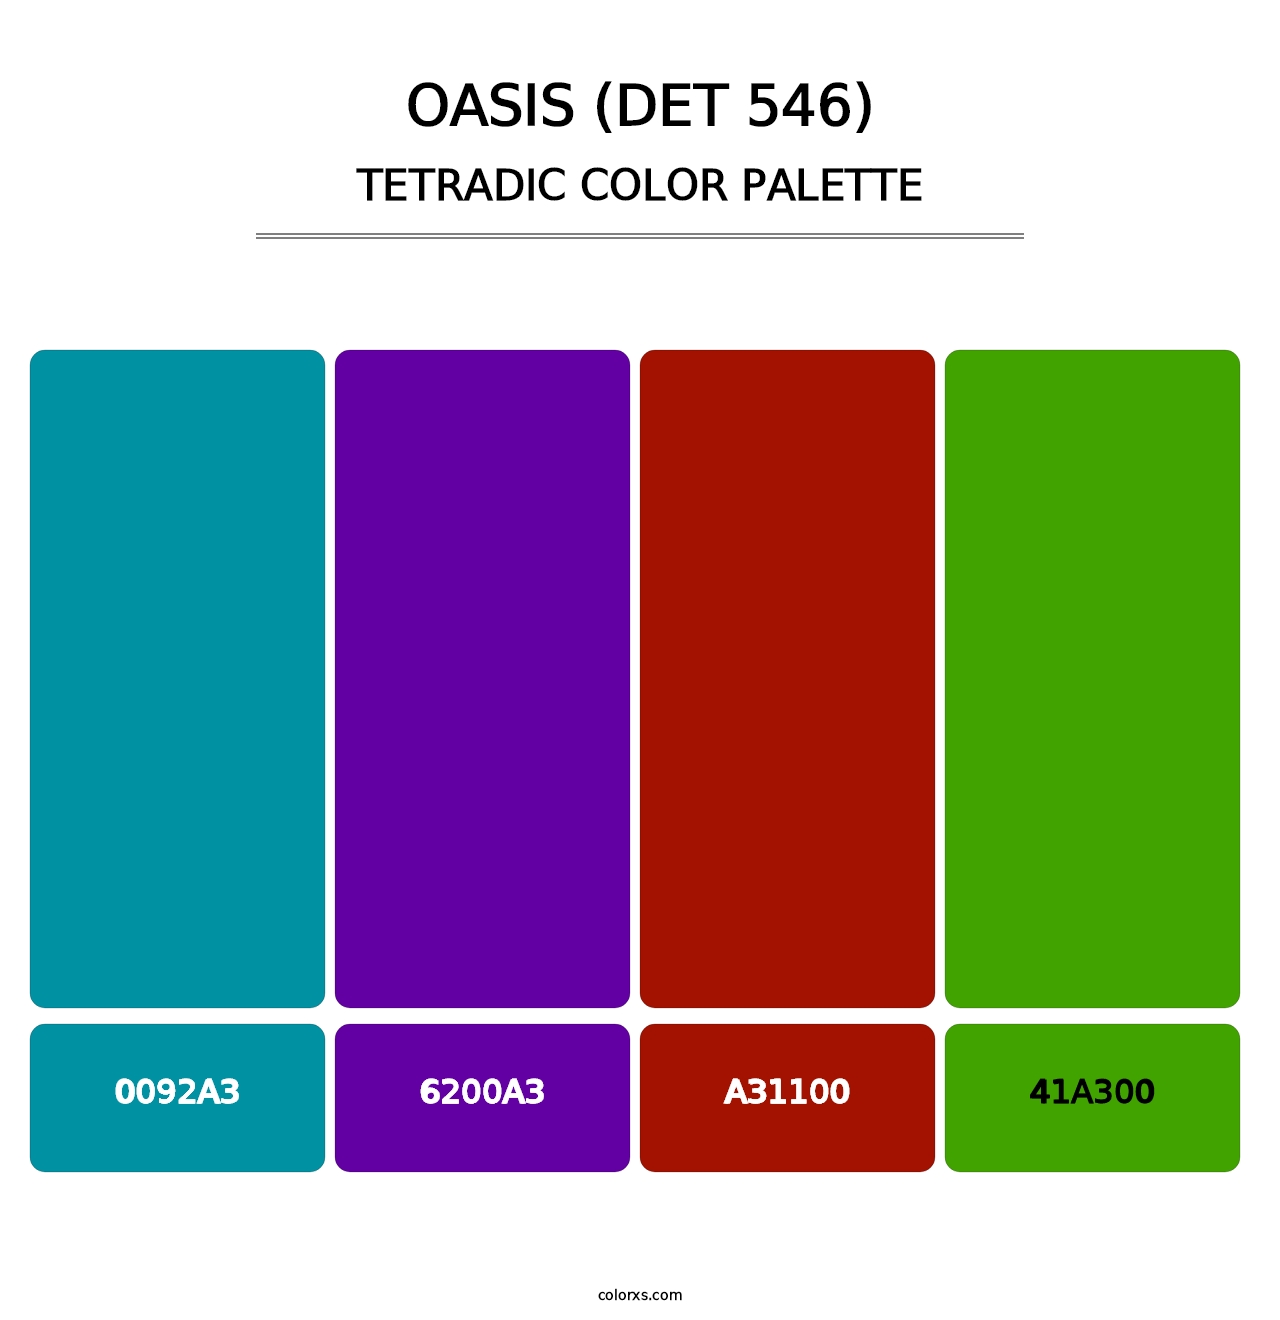 Oasis (DET 546) - Tetradic Color Palette